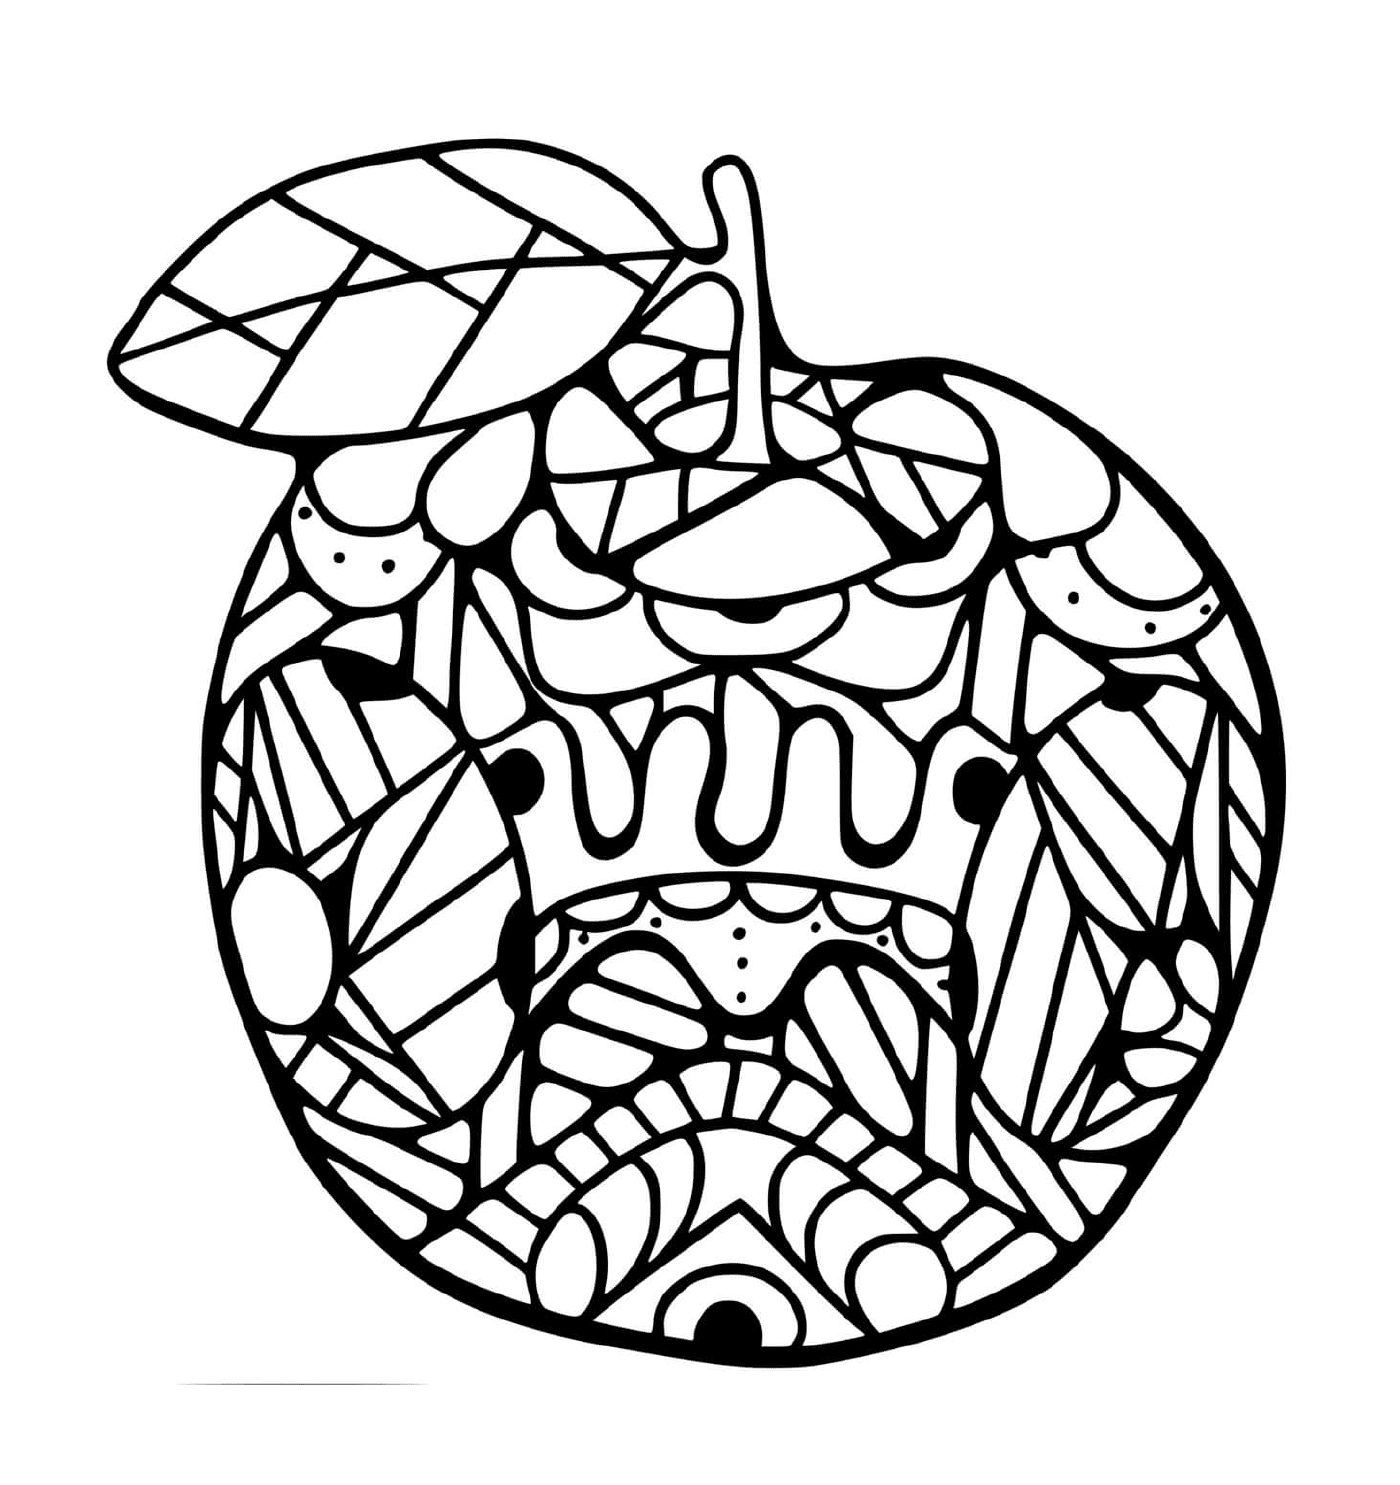  Mandala-Obst : Apfel 